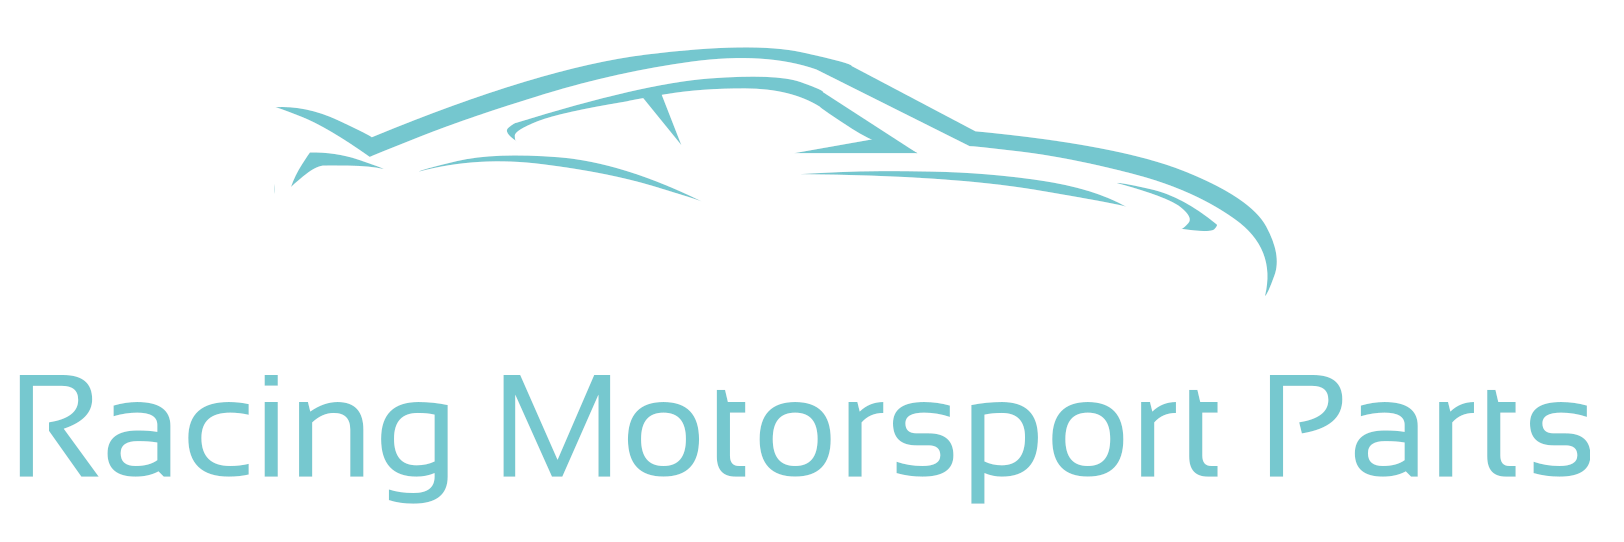 Racing Motorsport Parts